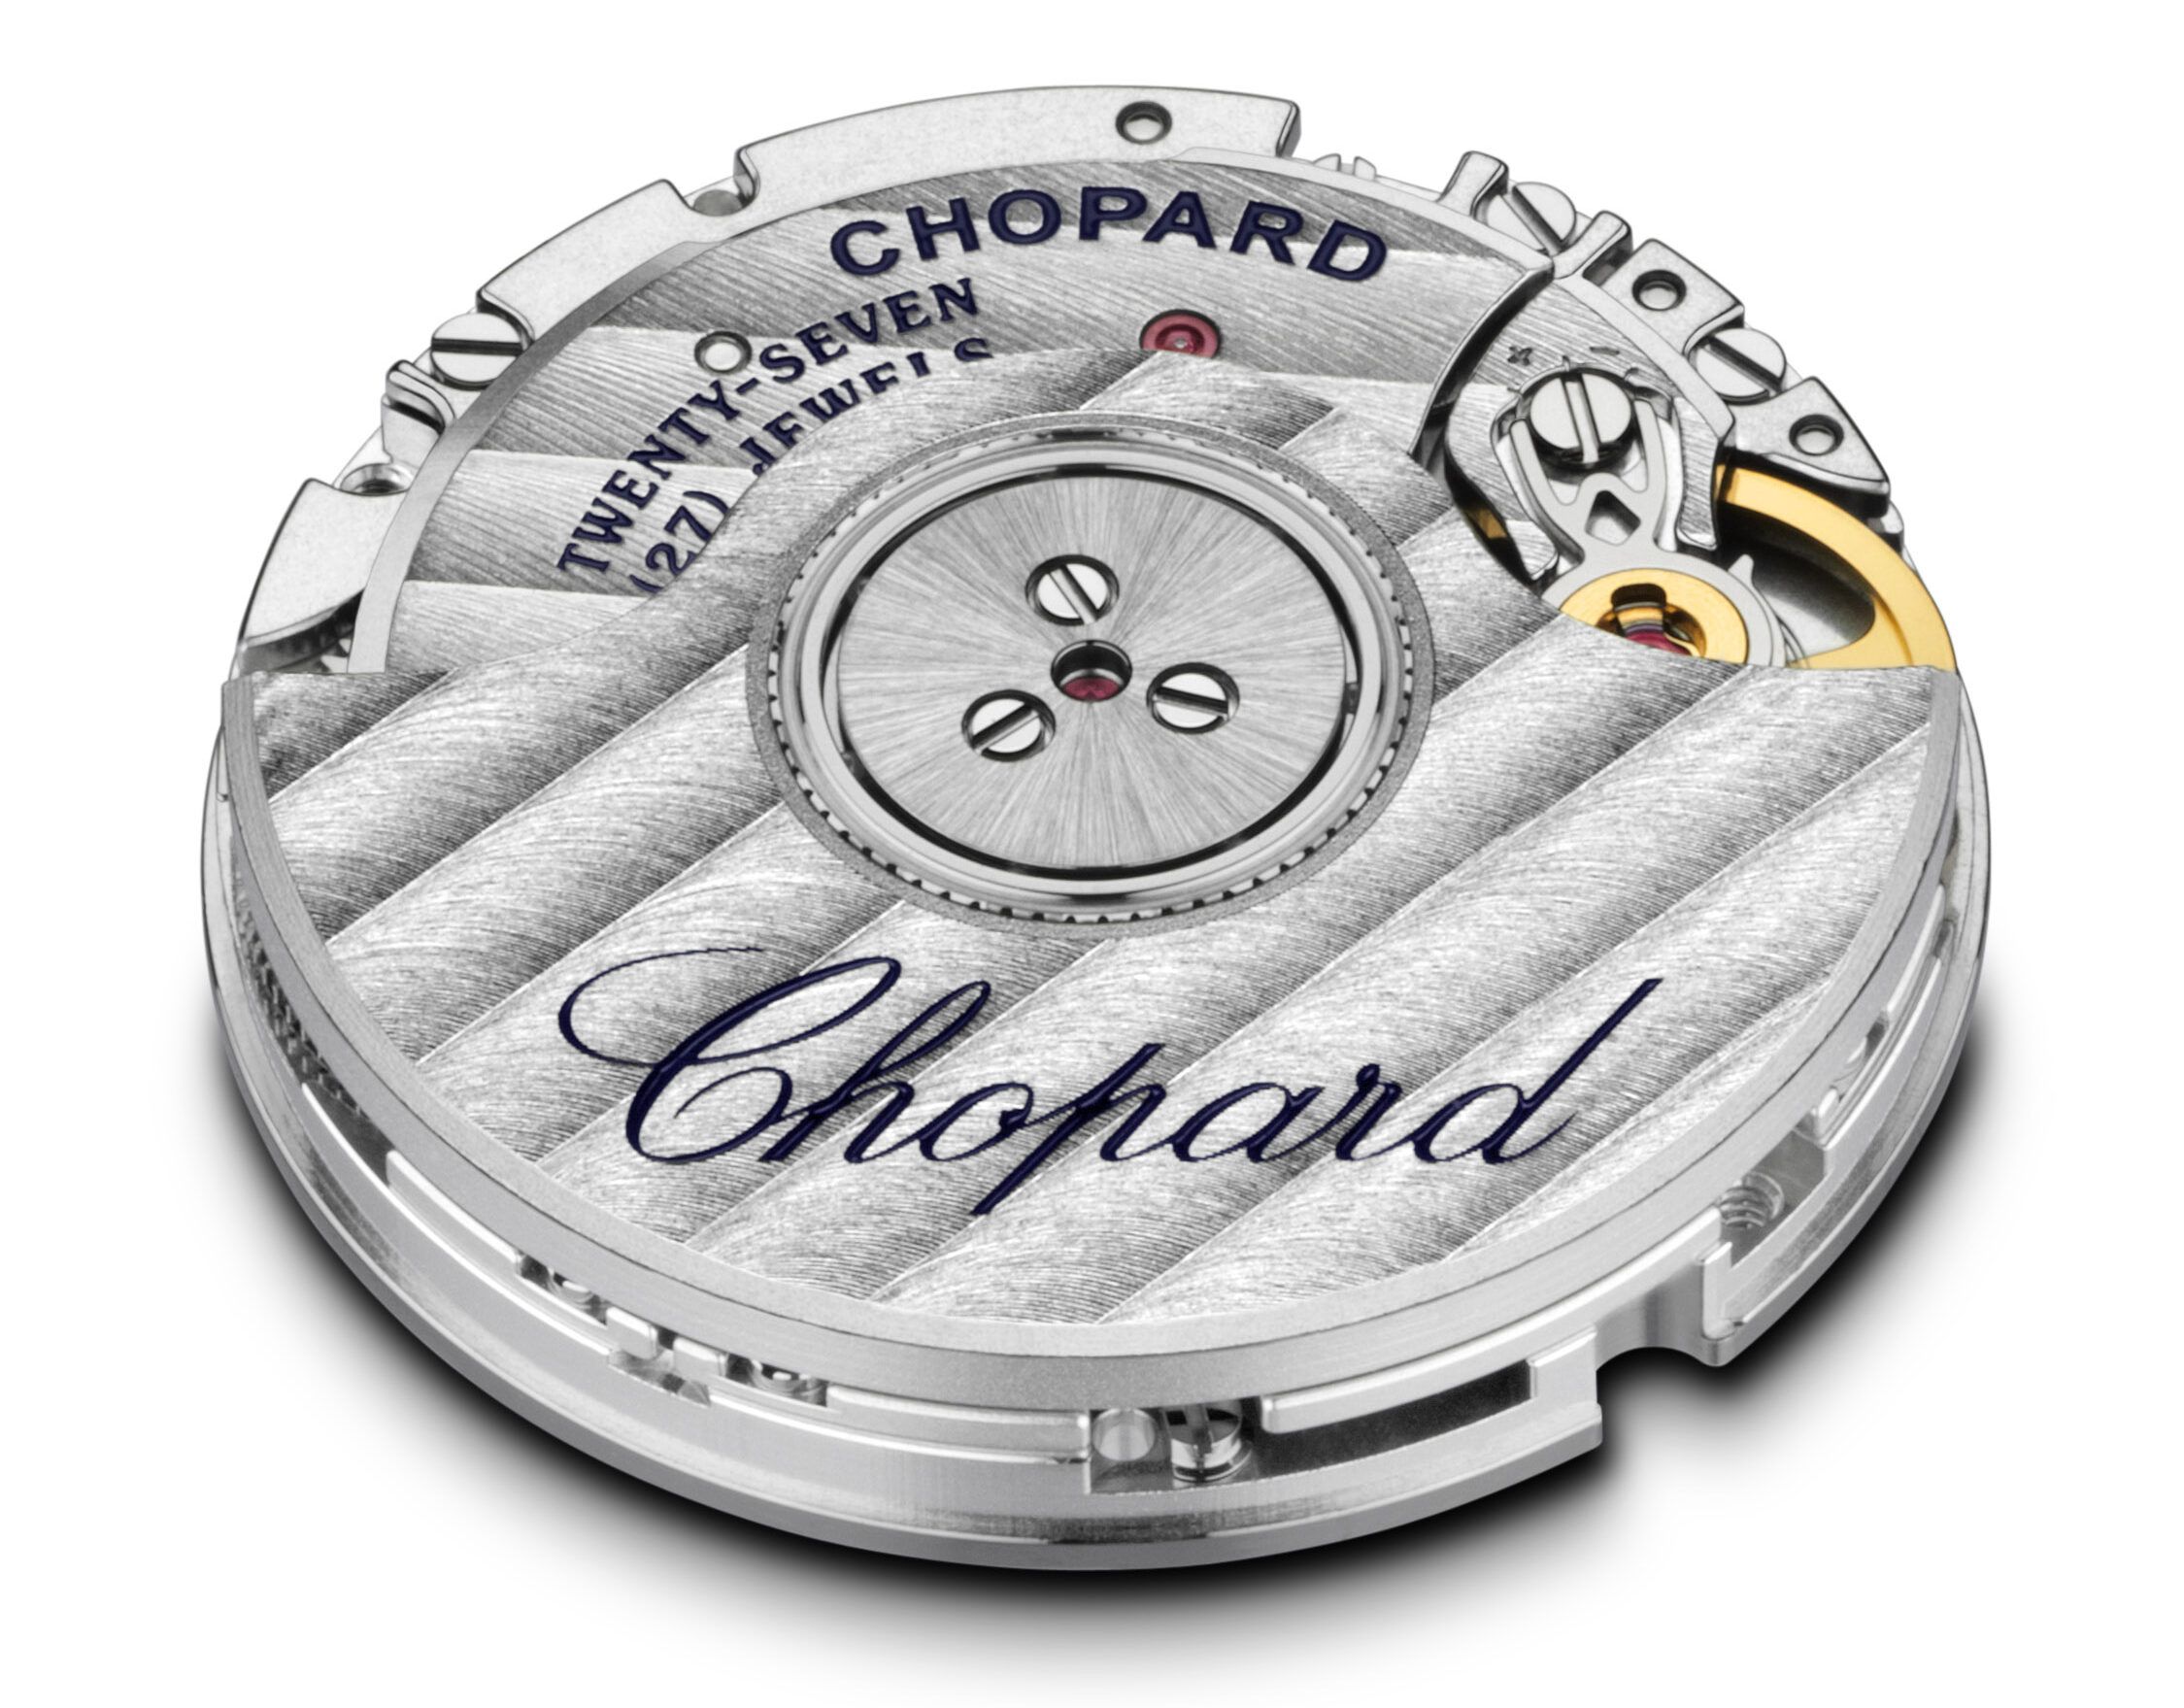  Chopard 09.01-C movement